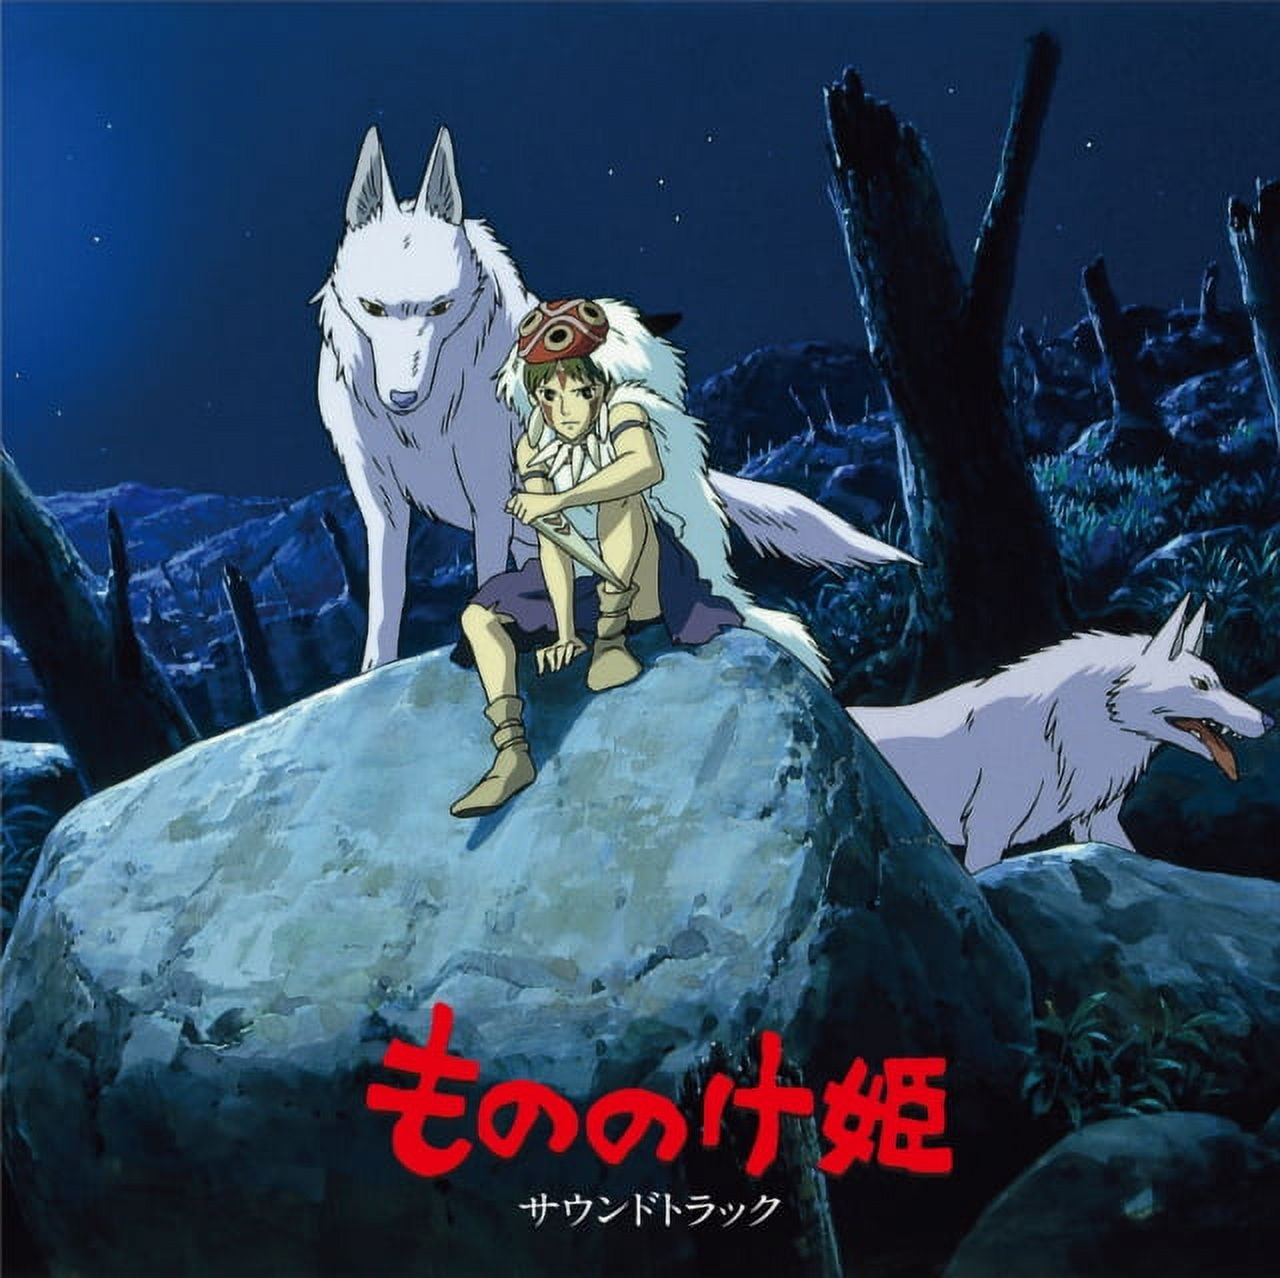 Berserk Original Soundtrack Music CD OST Japan 1997 TV Anime NEW